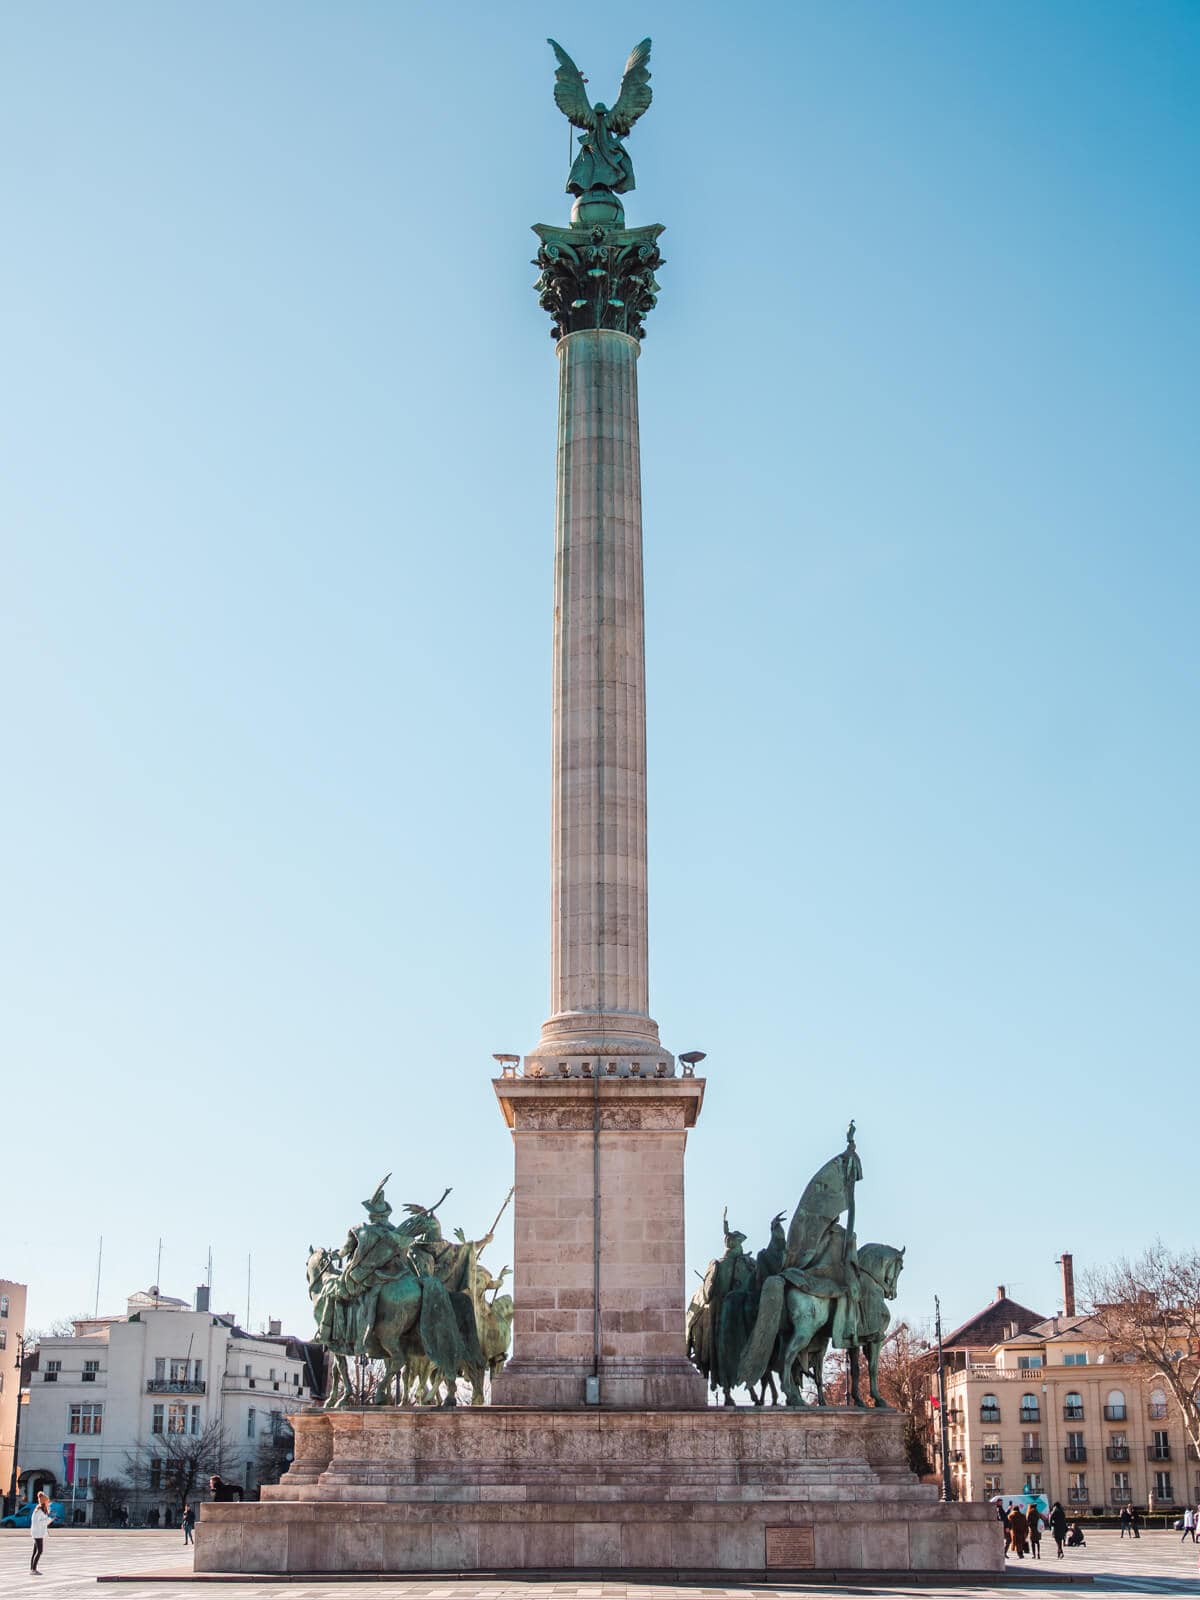 Budapest Instagram photo guide - Hero Square